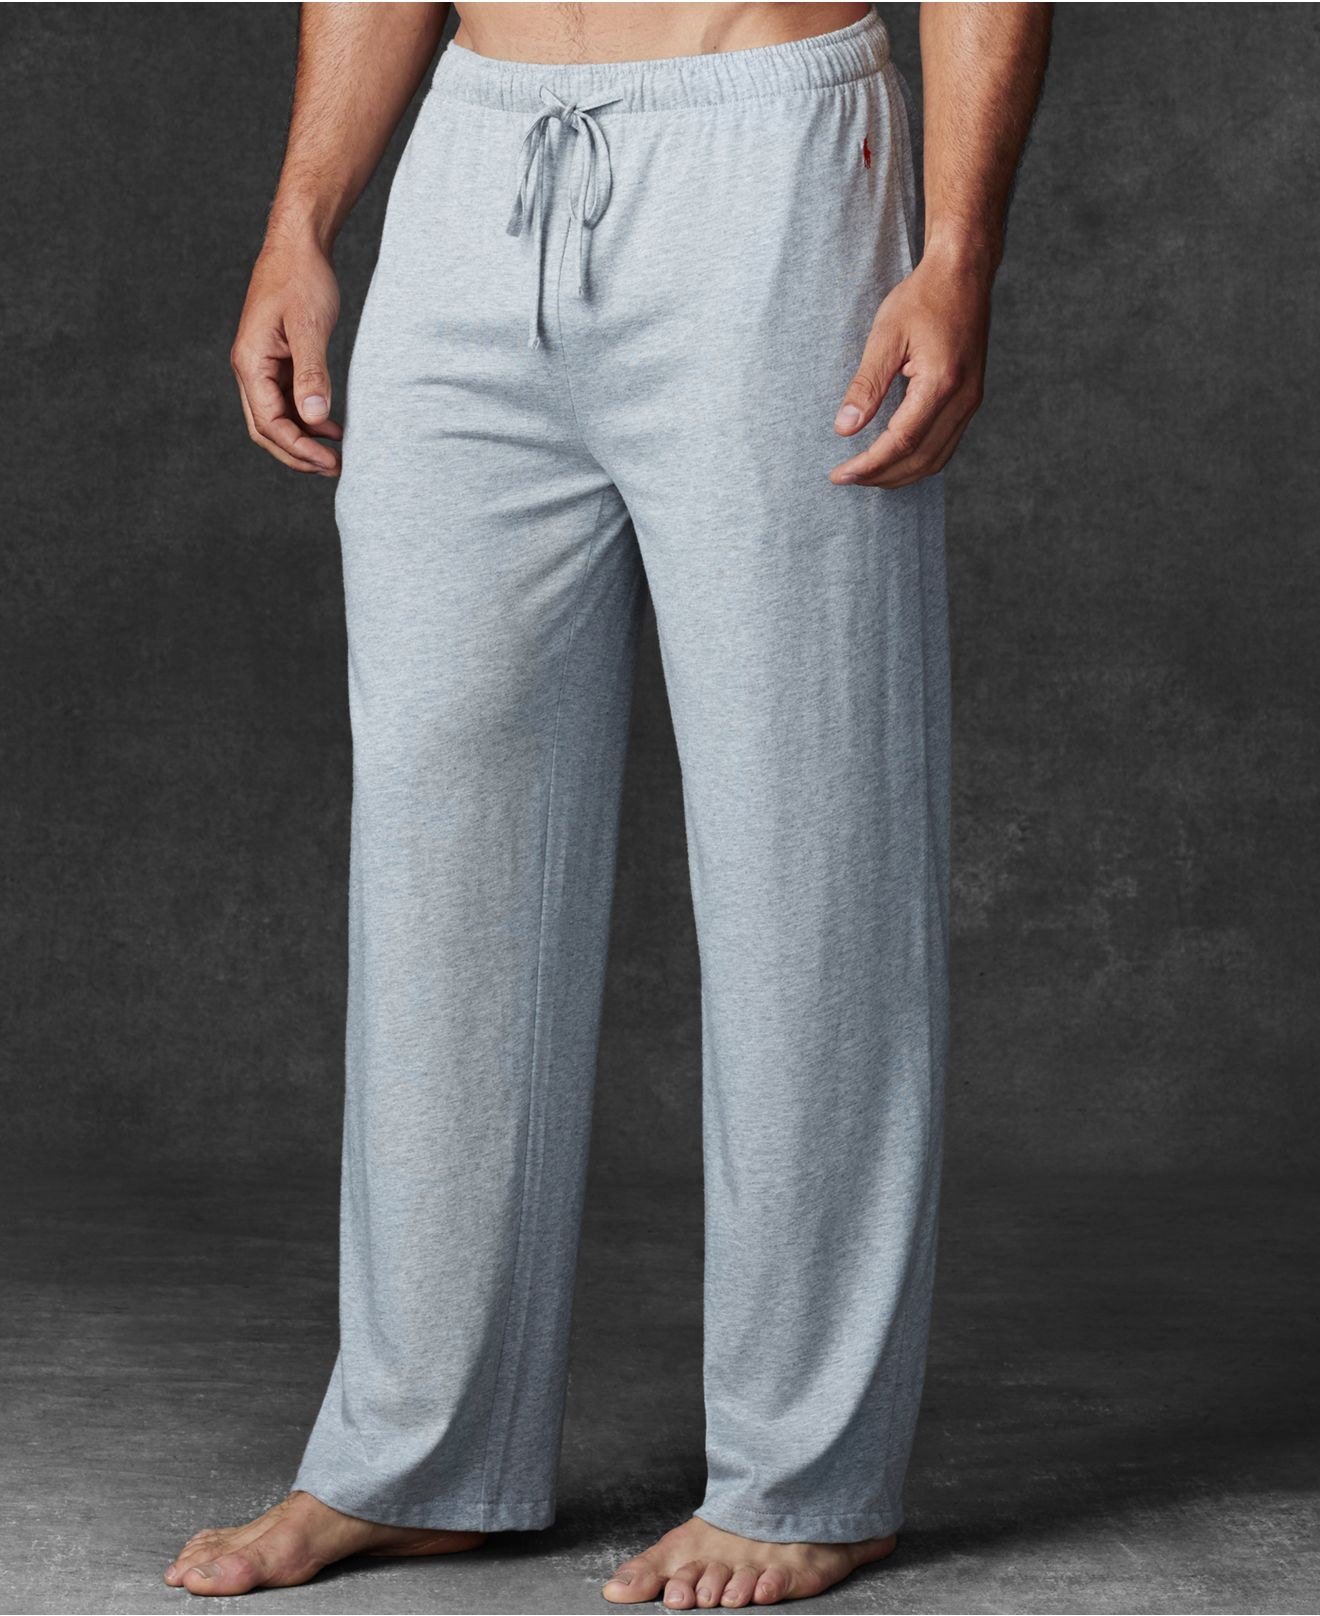 Polo ralph lauren Men's Supreme Comfort Knit Pajama Pants in Gray for